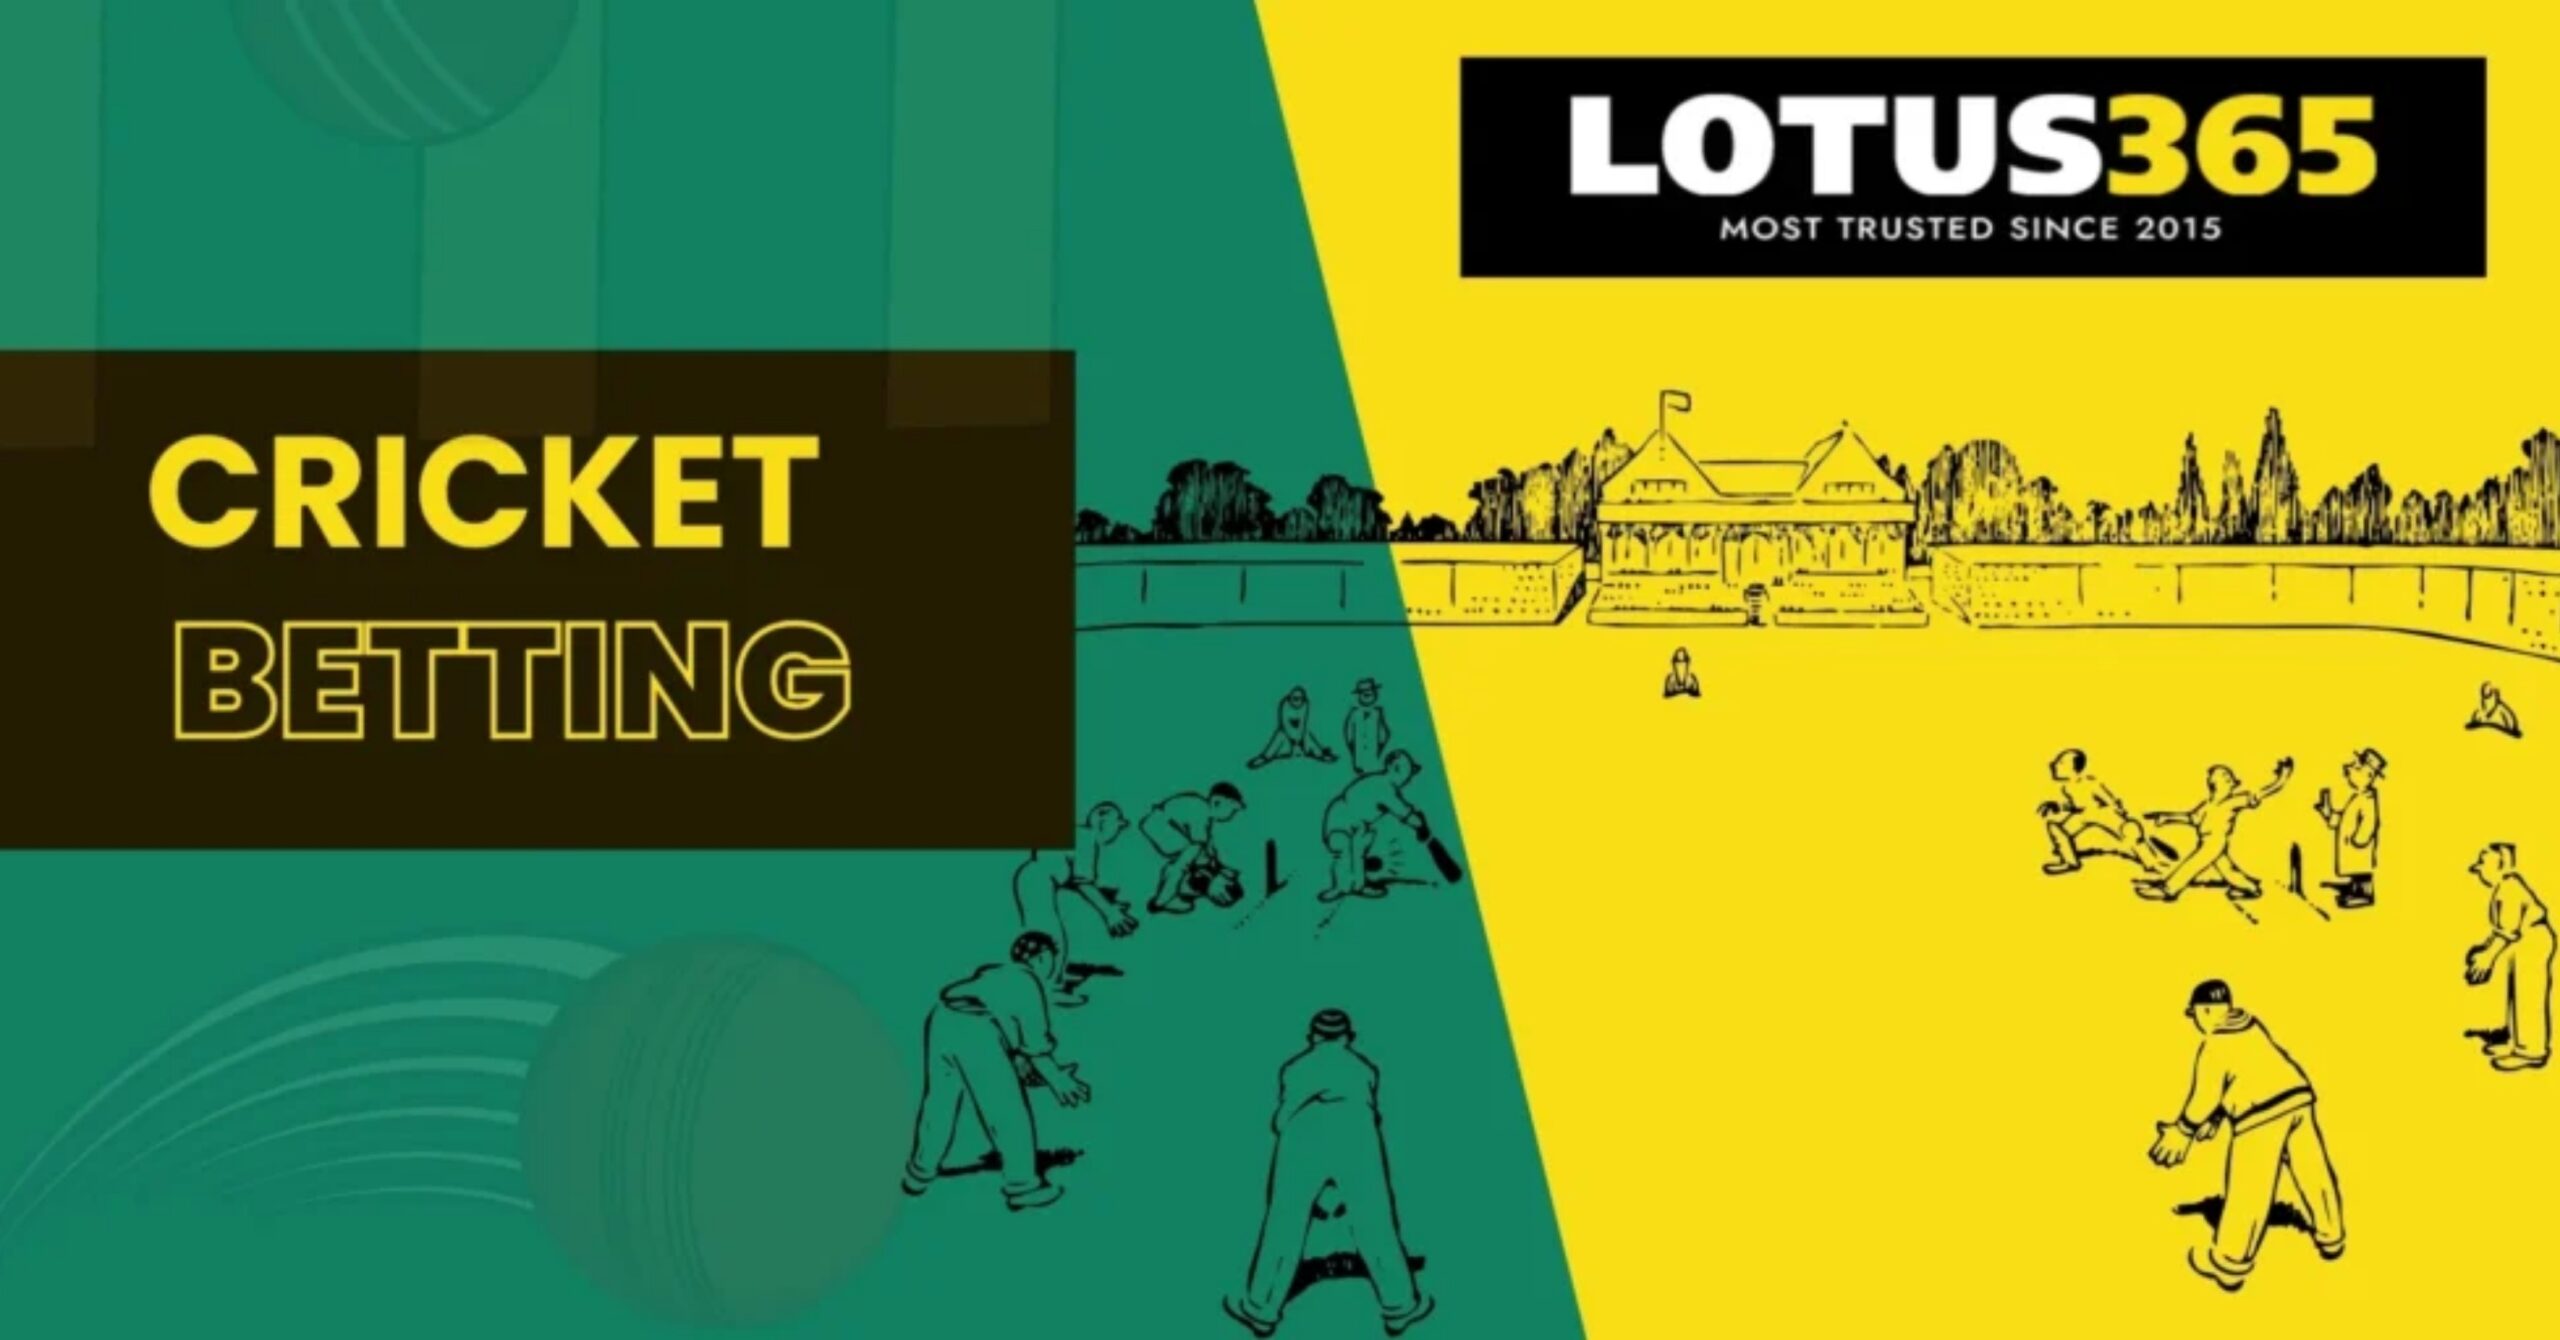 Cricket Betting: Lotus 365